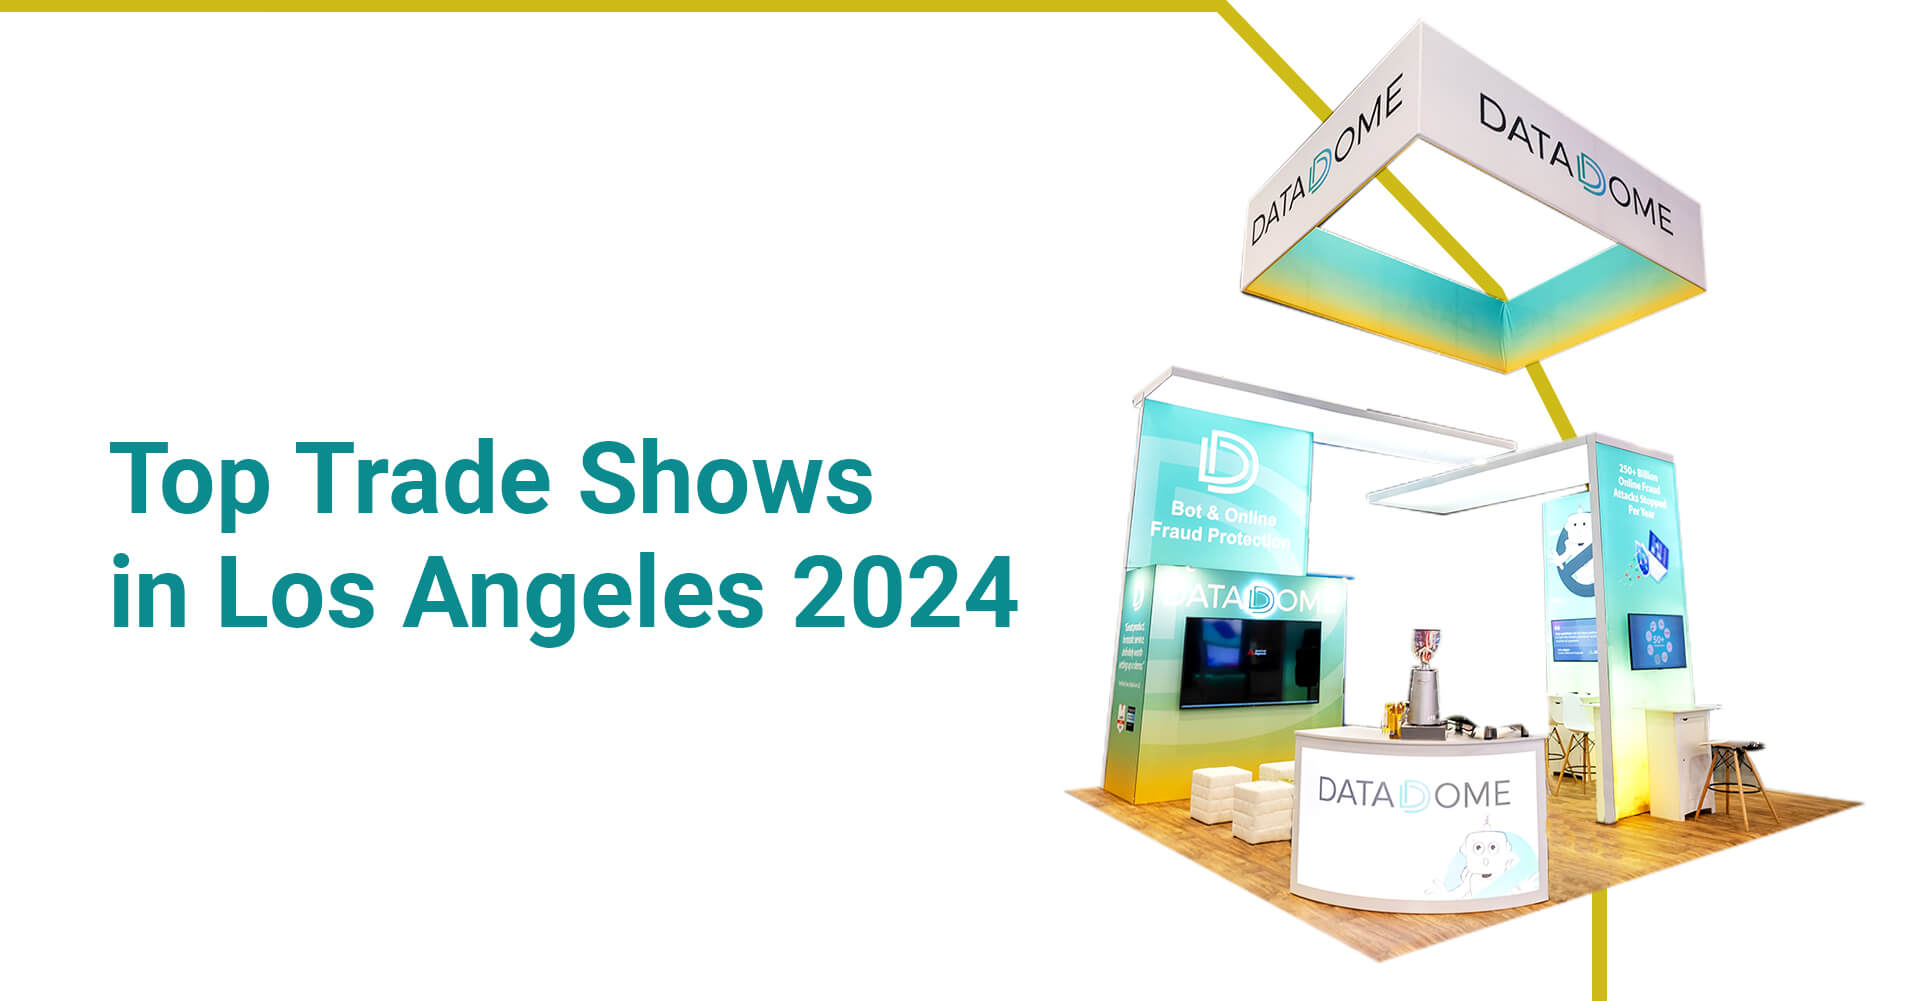 Los Angeles Trade Shows in 2024